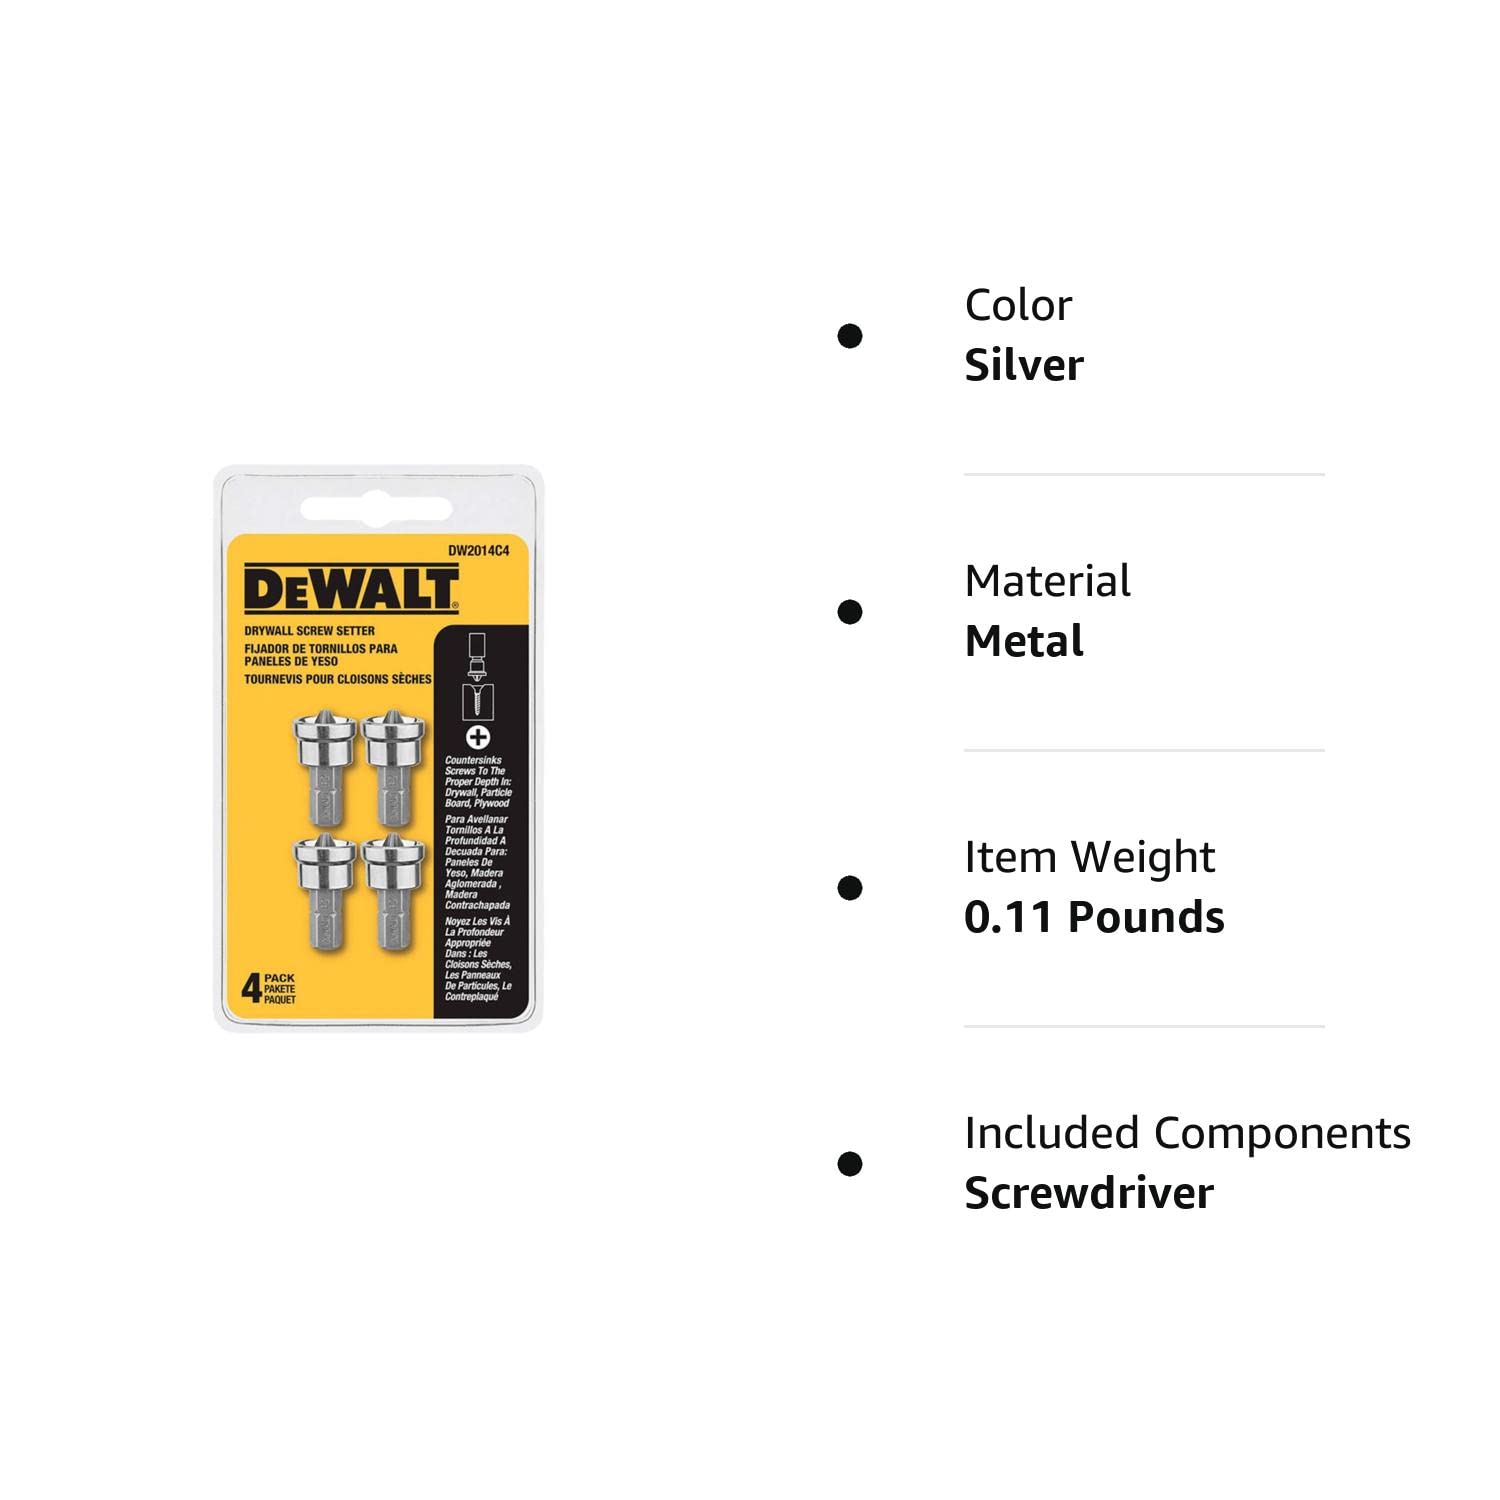 Dewalt DW2014C4 Drywall Screw Setter (4-Pack)